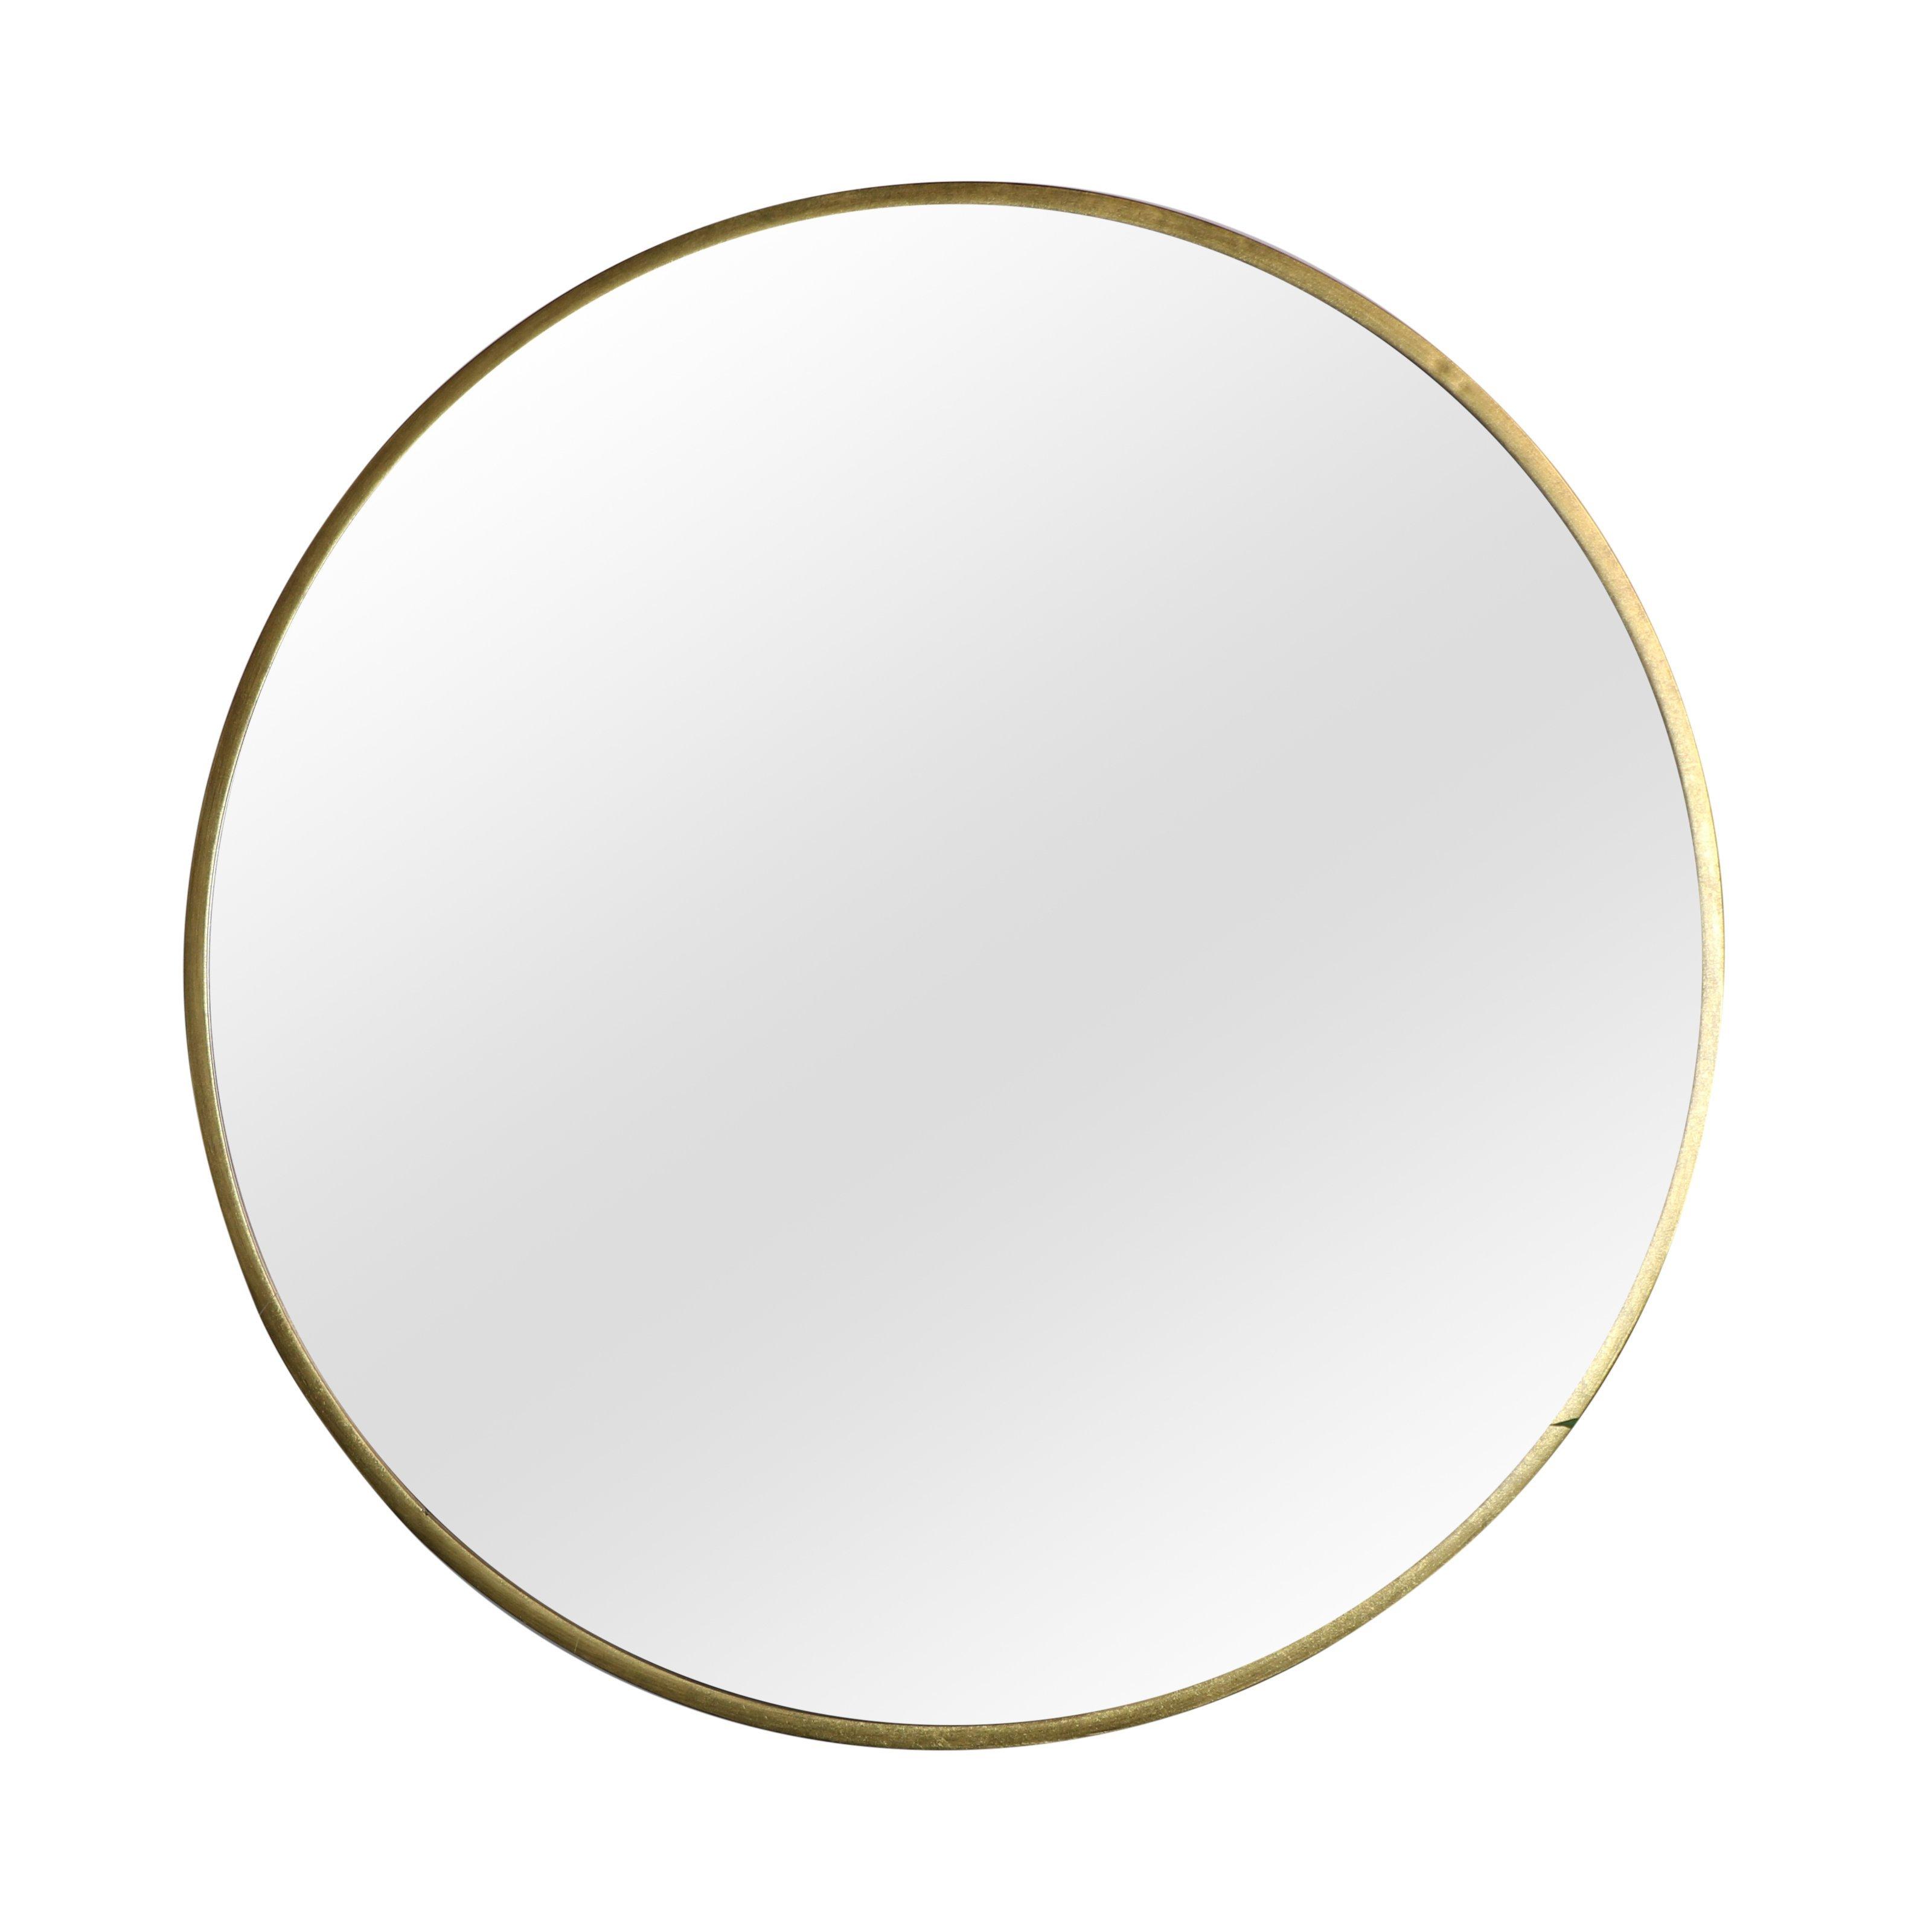 Extra Large Round Gold Wall Mirror 120cm X 120cm (1.2 M X 1.2 M)